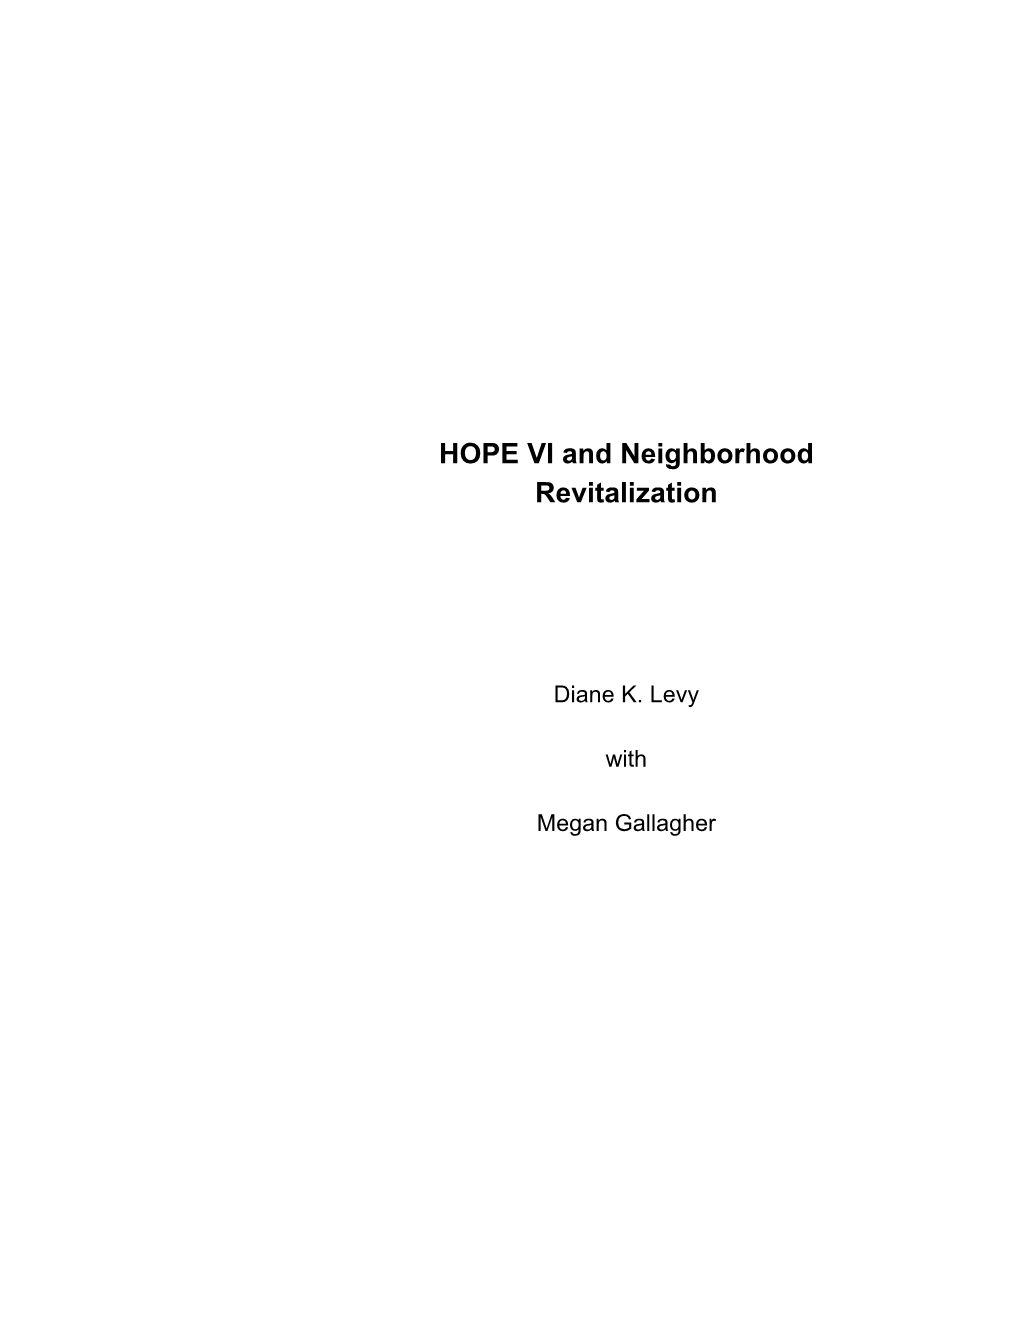 HOPE VI and Neighborhood Revitalization Final Report